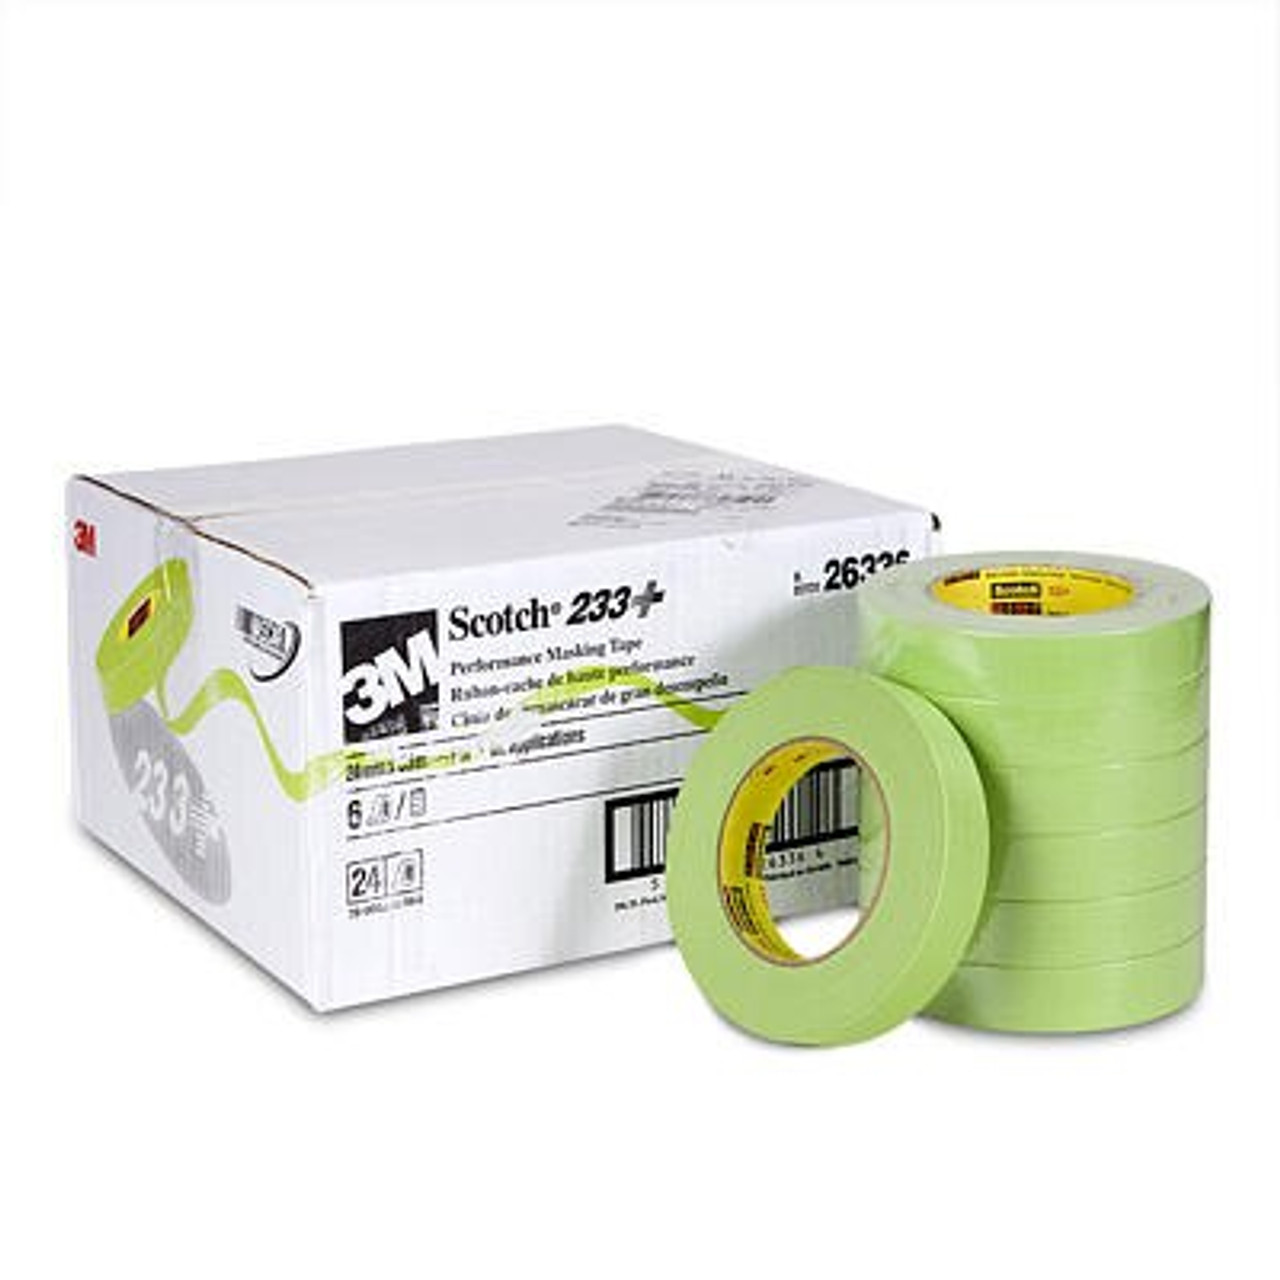 051115647635, 3M High Performance Masking Tape - Green